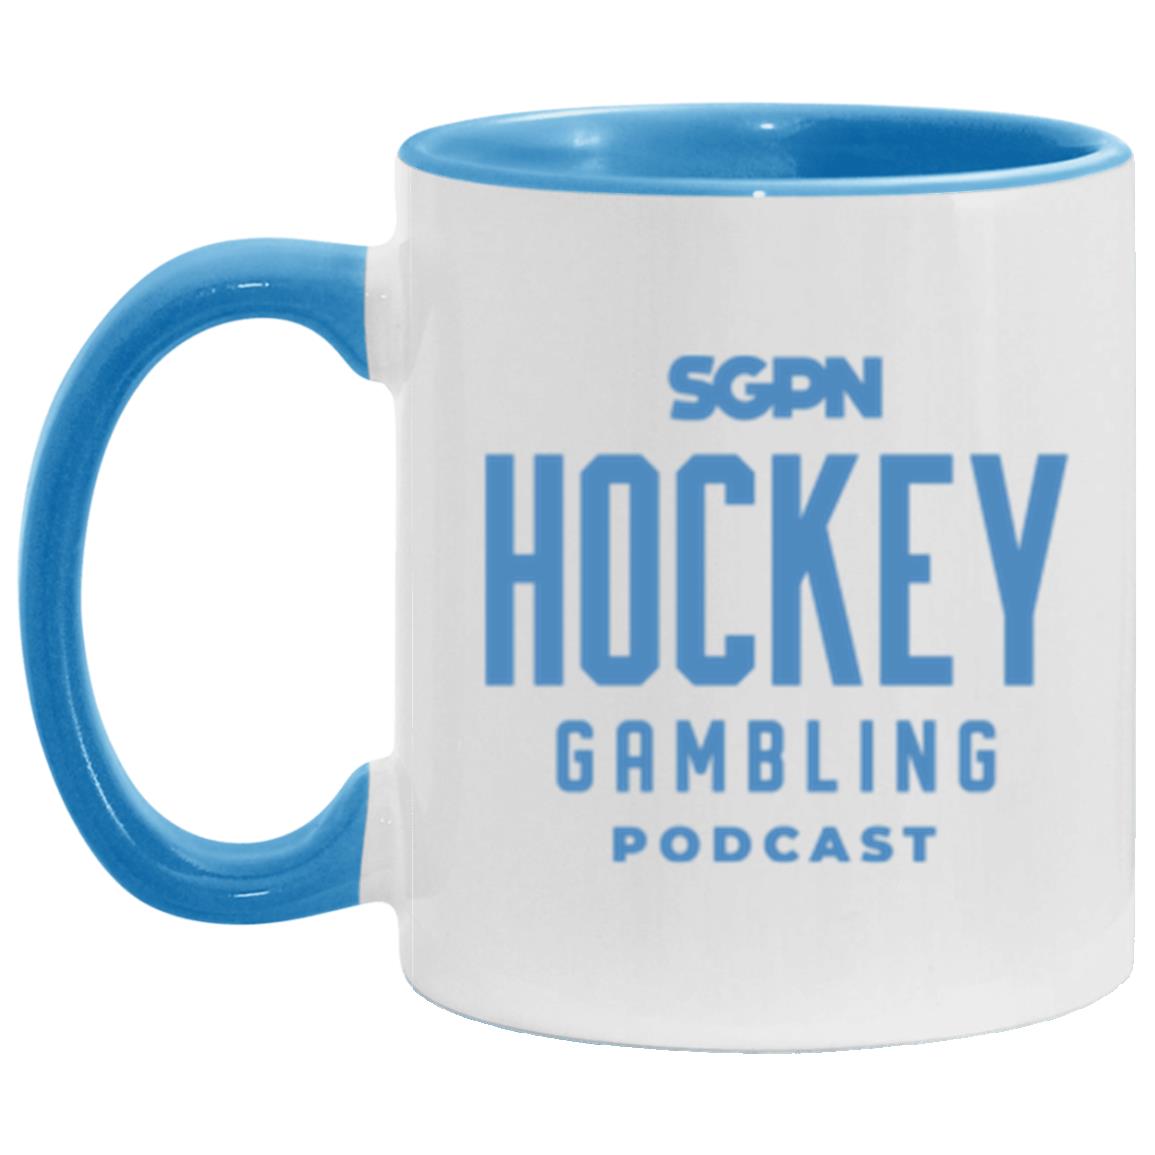 Hockey Gambling Podcast 11 oz. Accent Mug